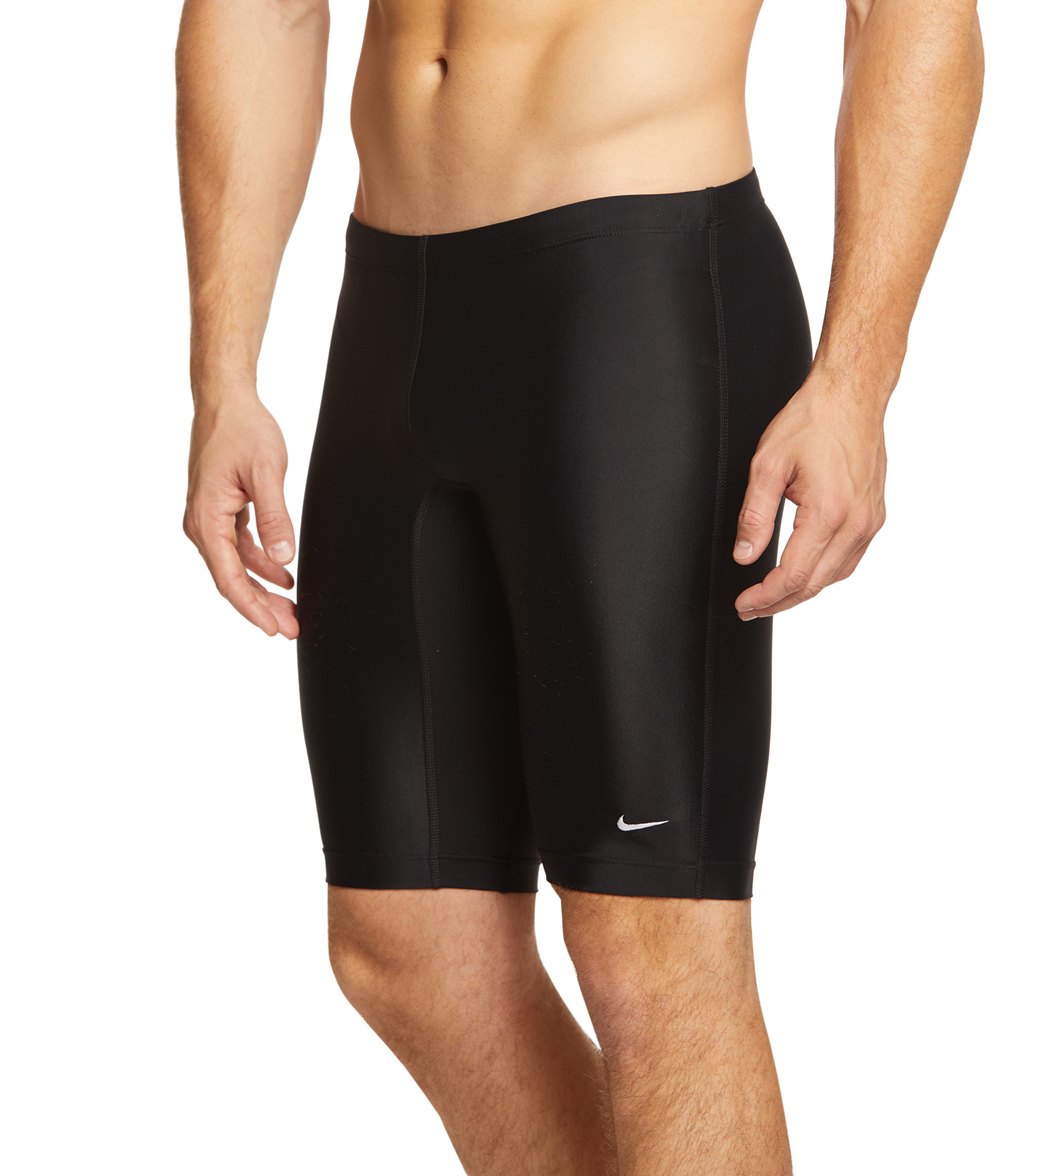 Nike Swim Nylon Core Solids Jammer Swimsuit at SwimOutlet.com